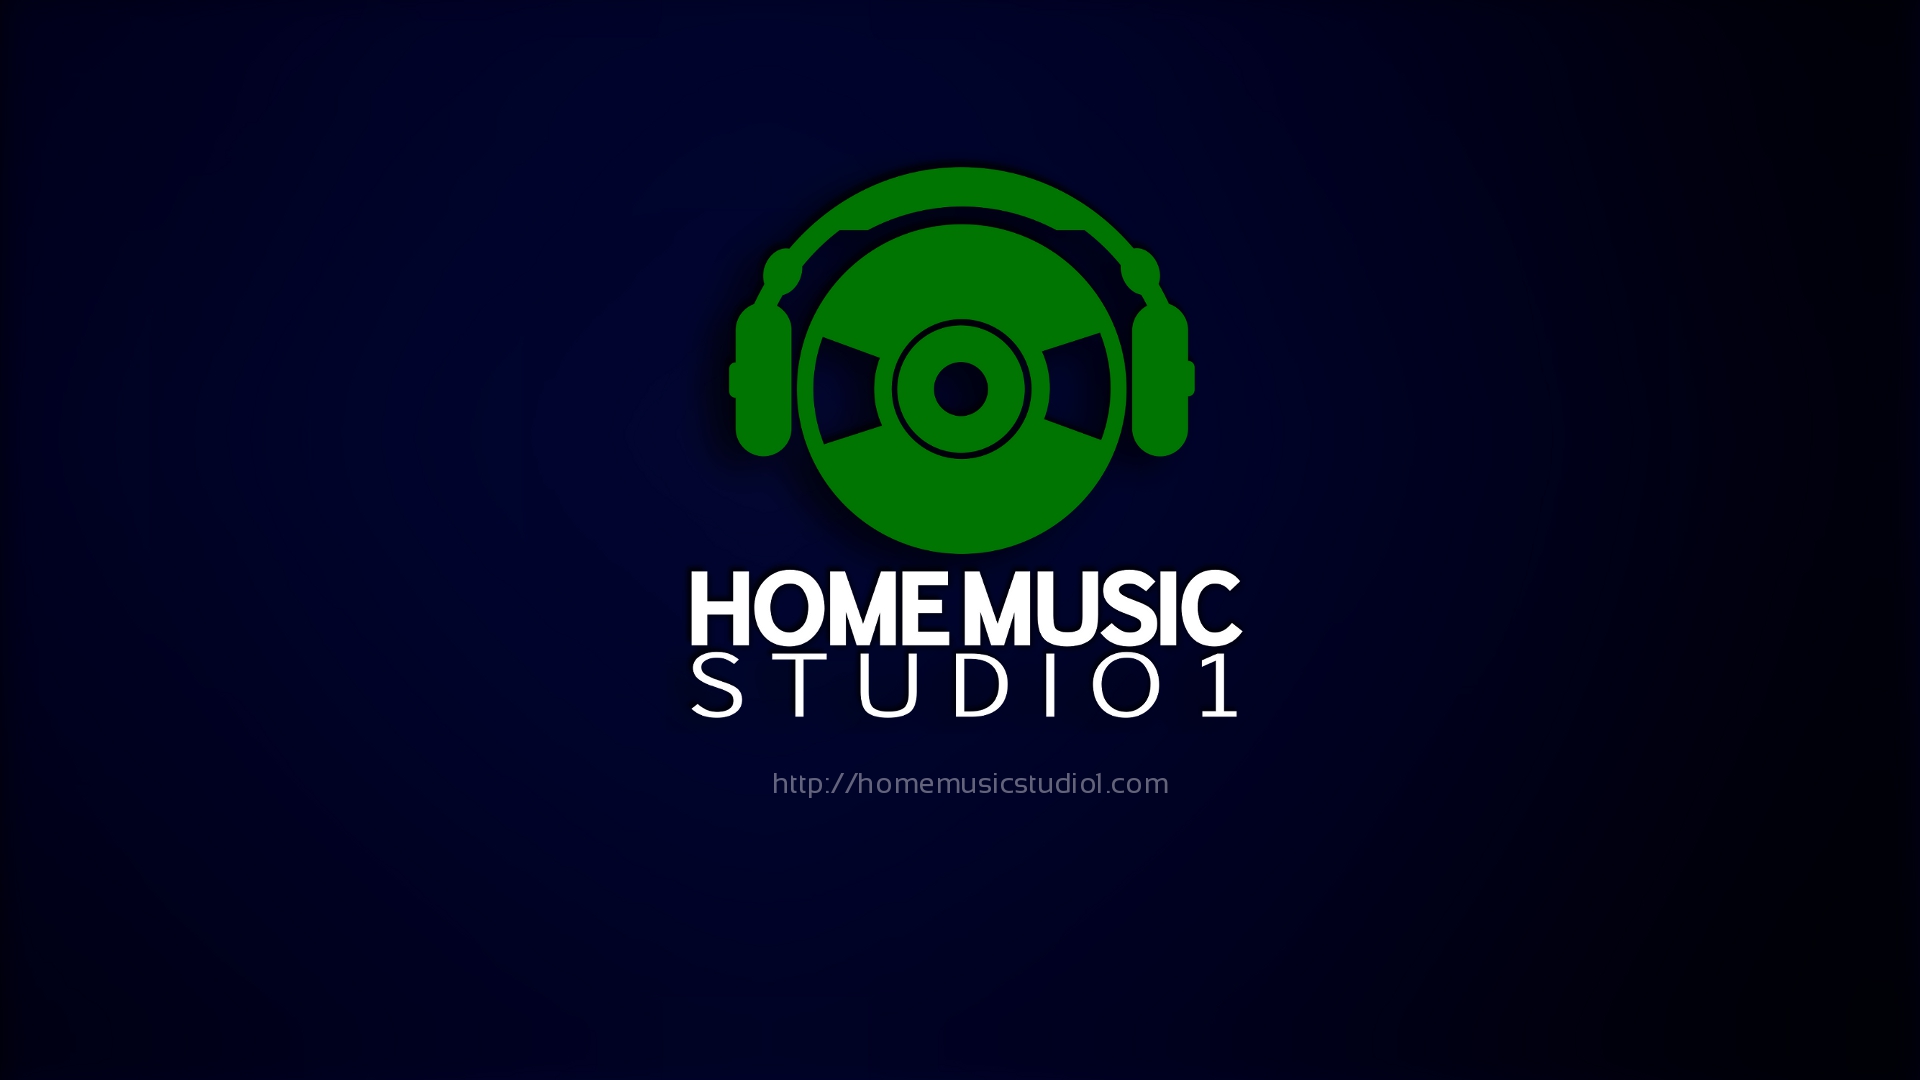 Free Home Music Studio 1 Wallpapers   Home Music Studio 1